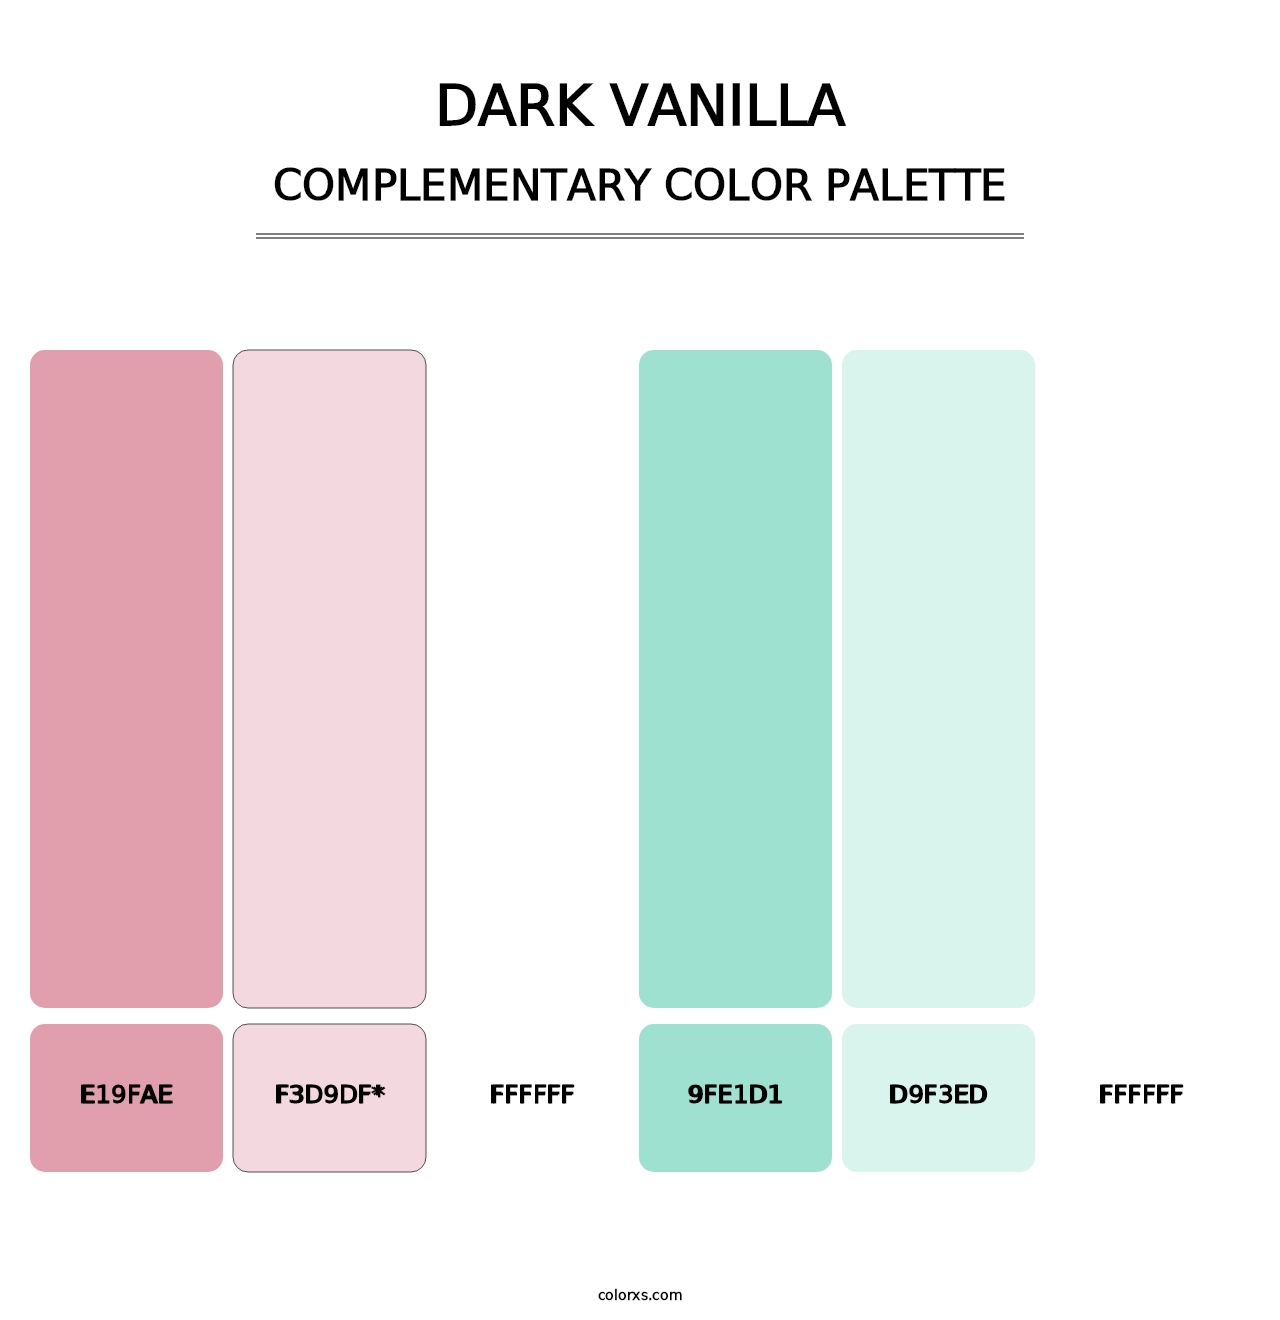 Dark Vanilla - Complementary Color Palette